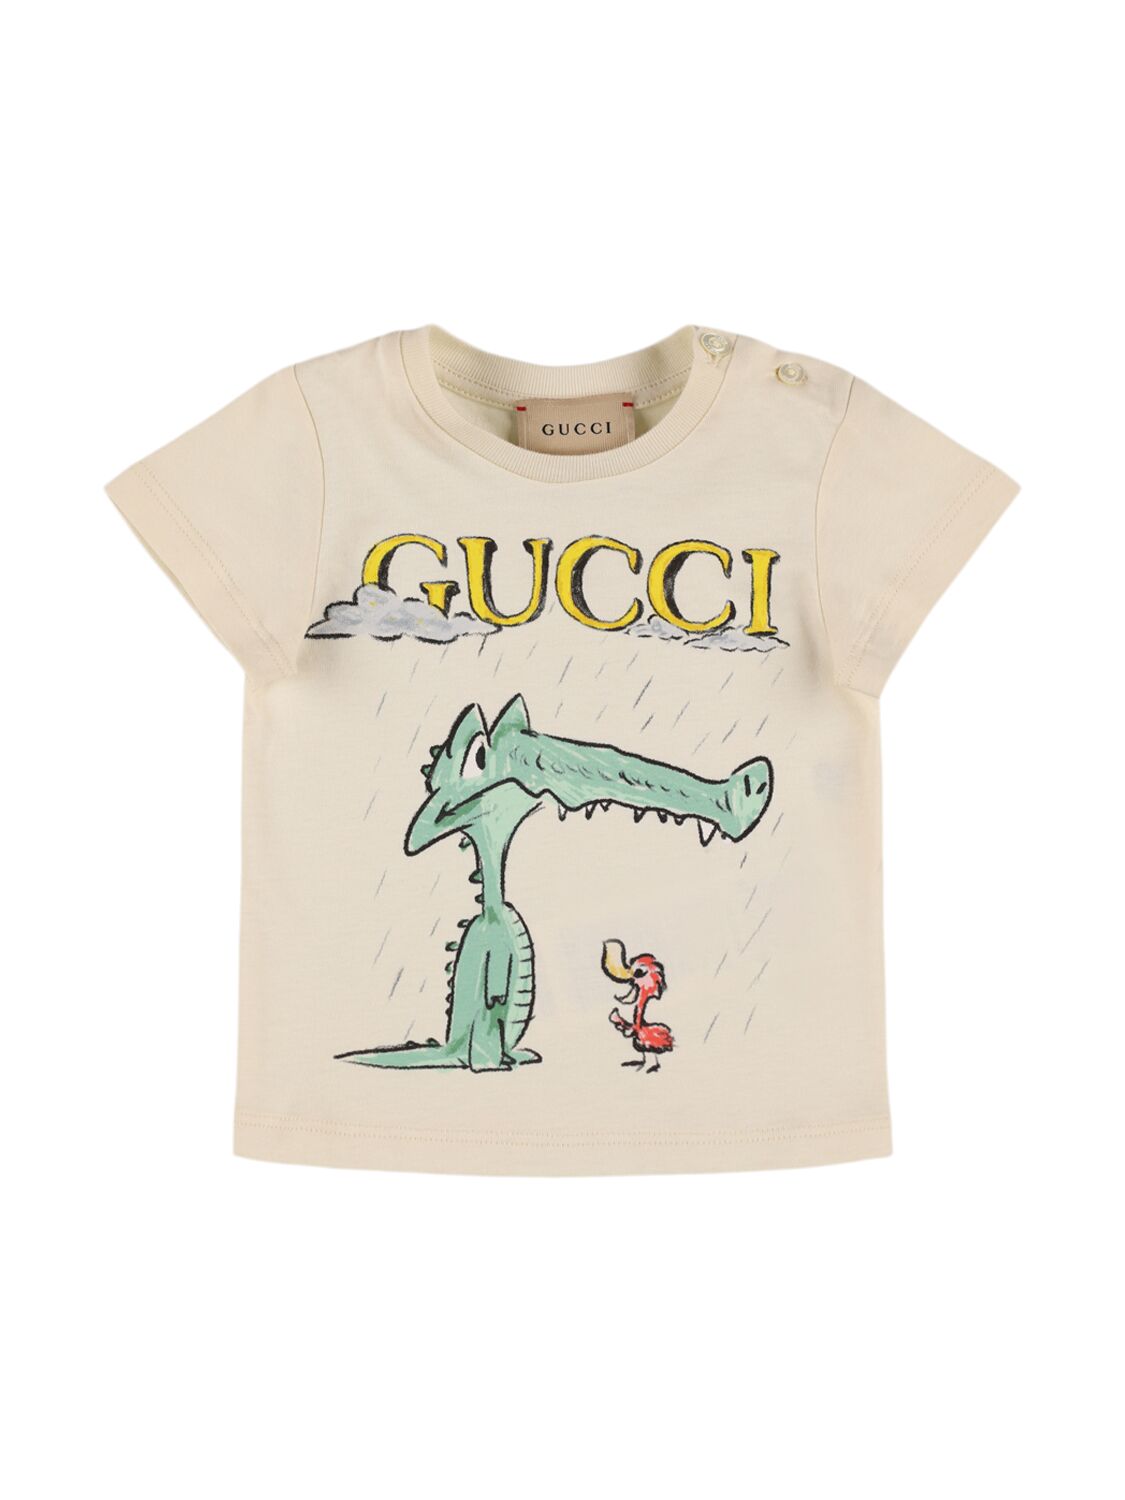 Gucci Crocodile Cotton T-shirt In Brown